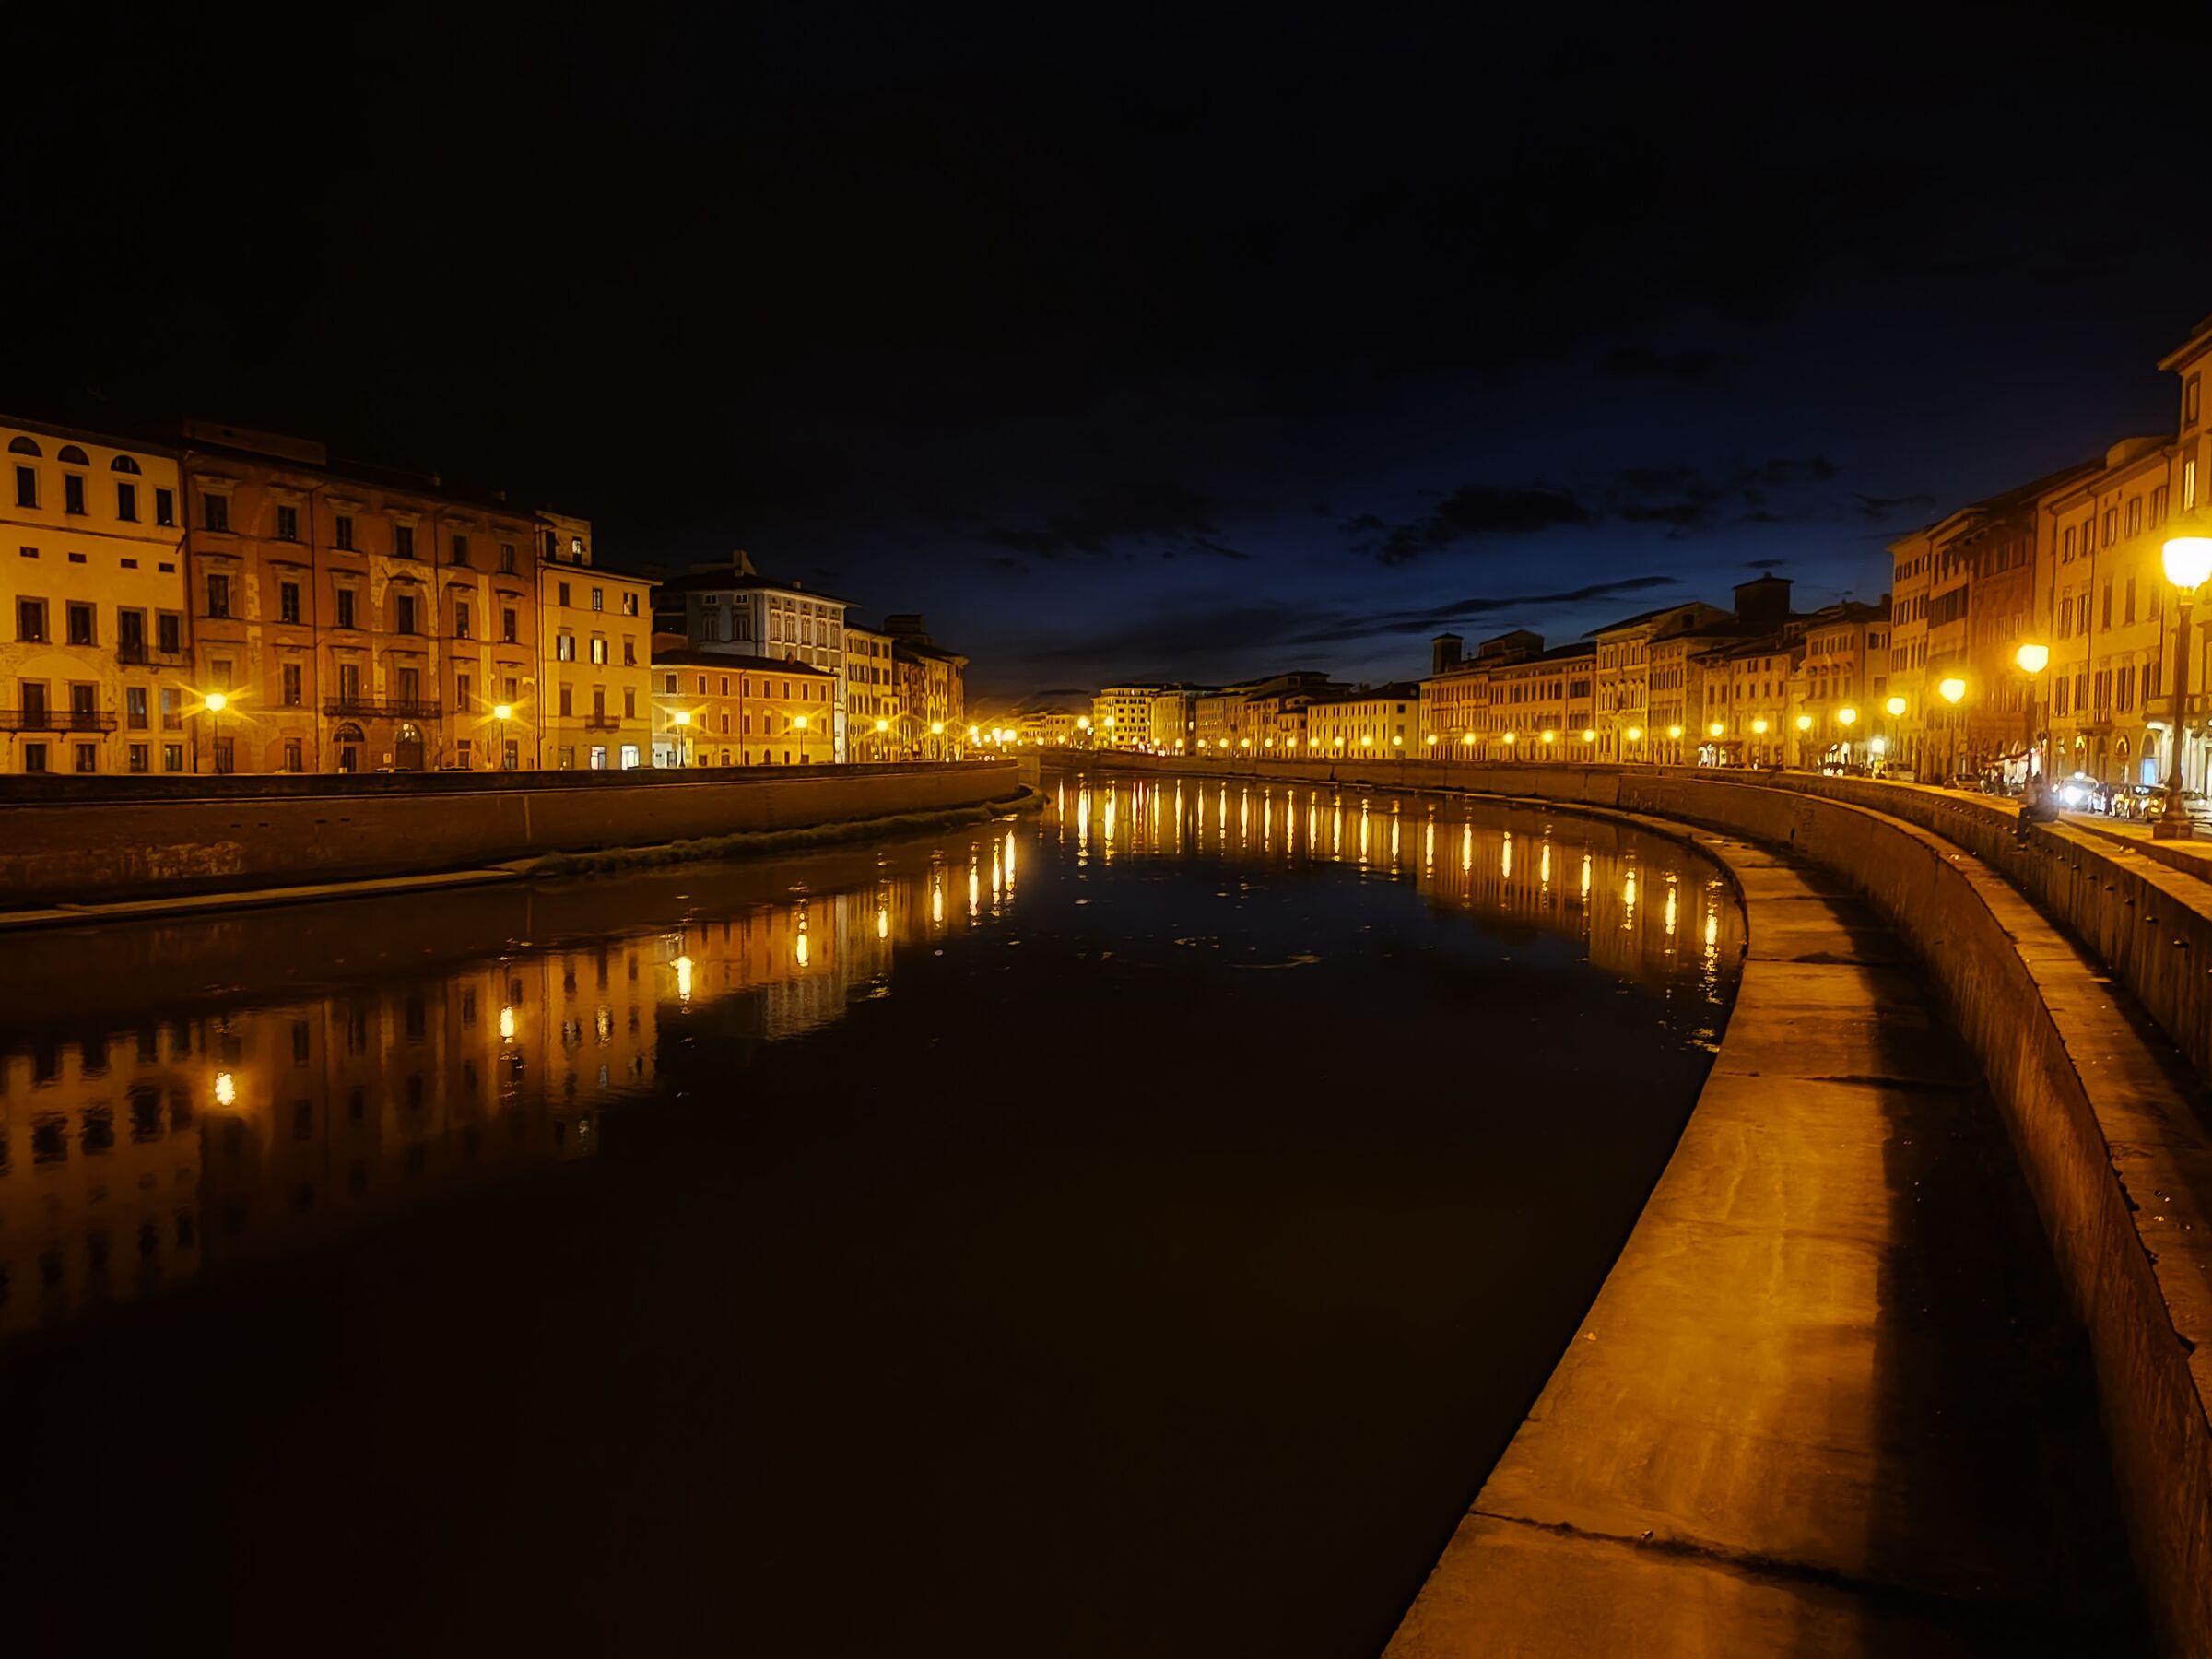 Lungarno to Pisa at night ...